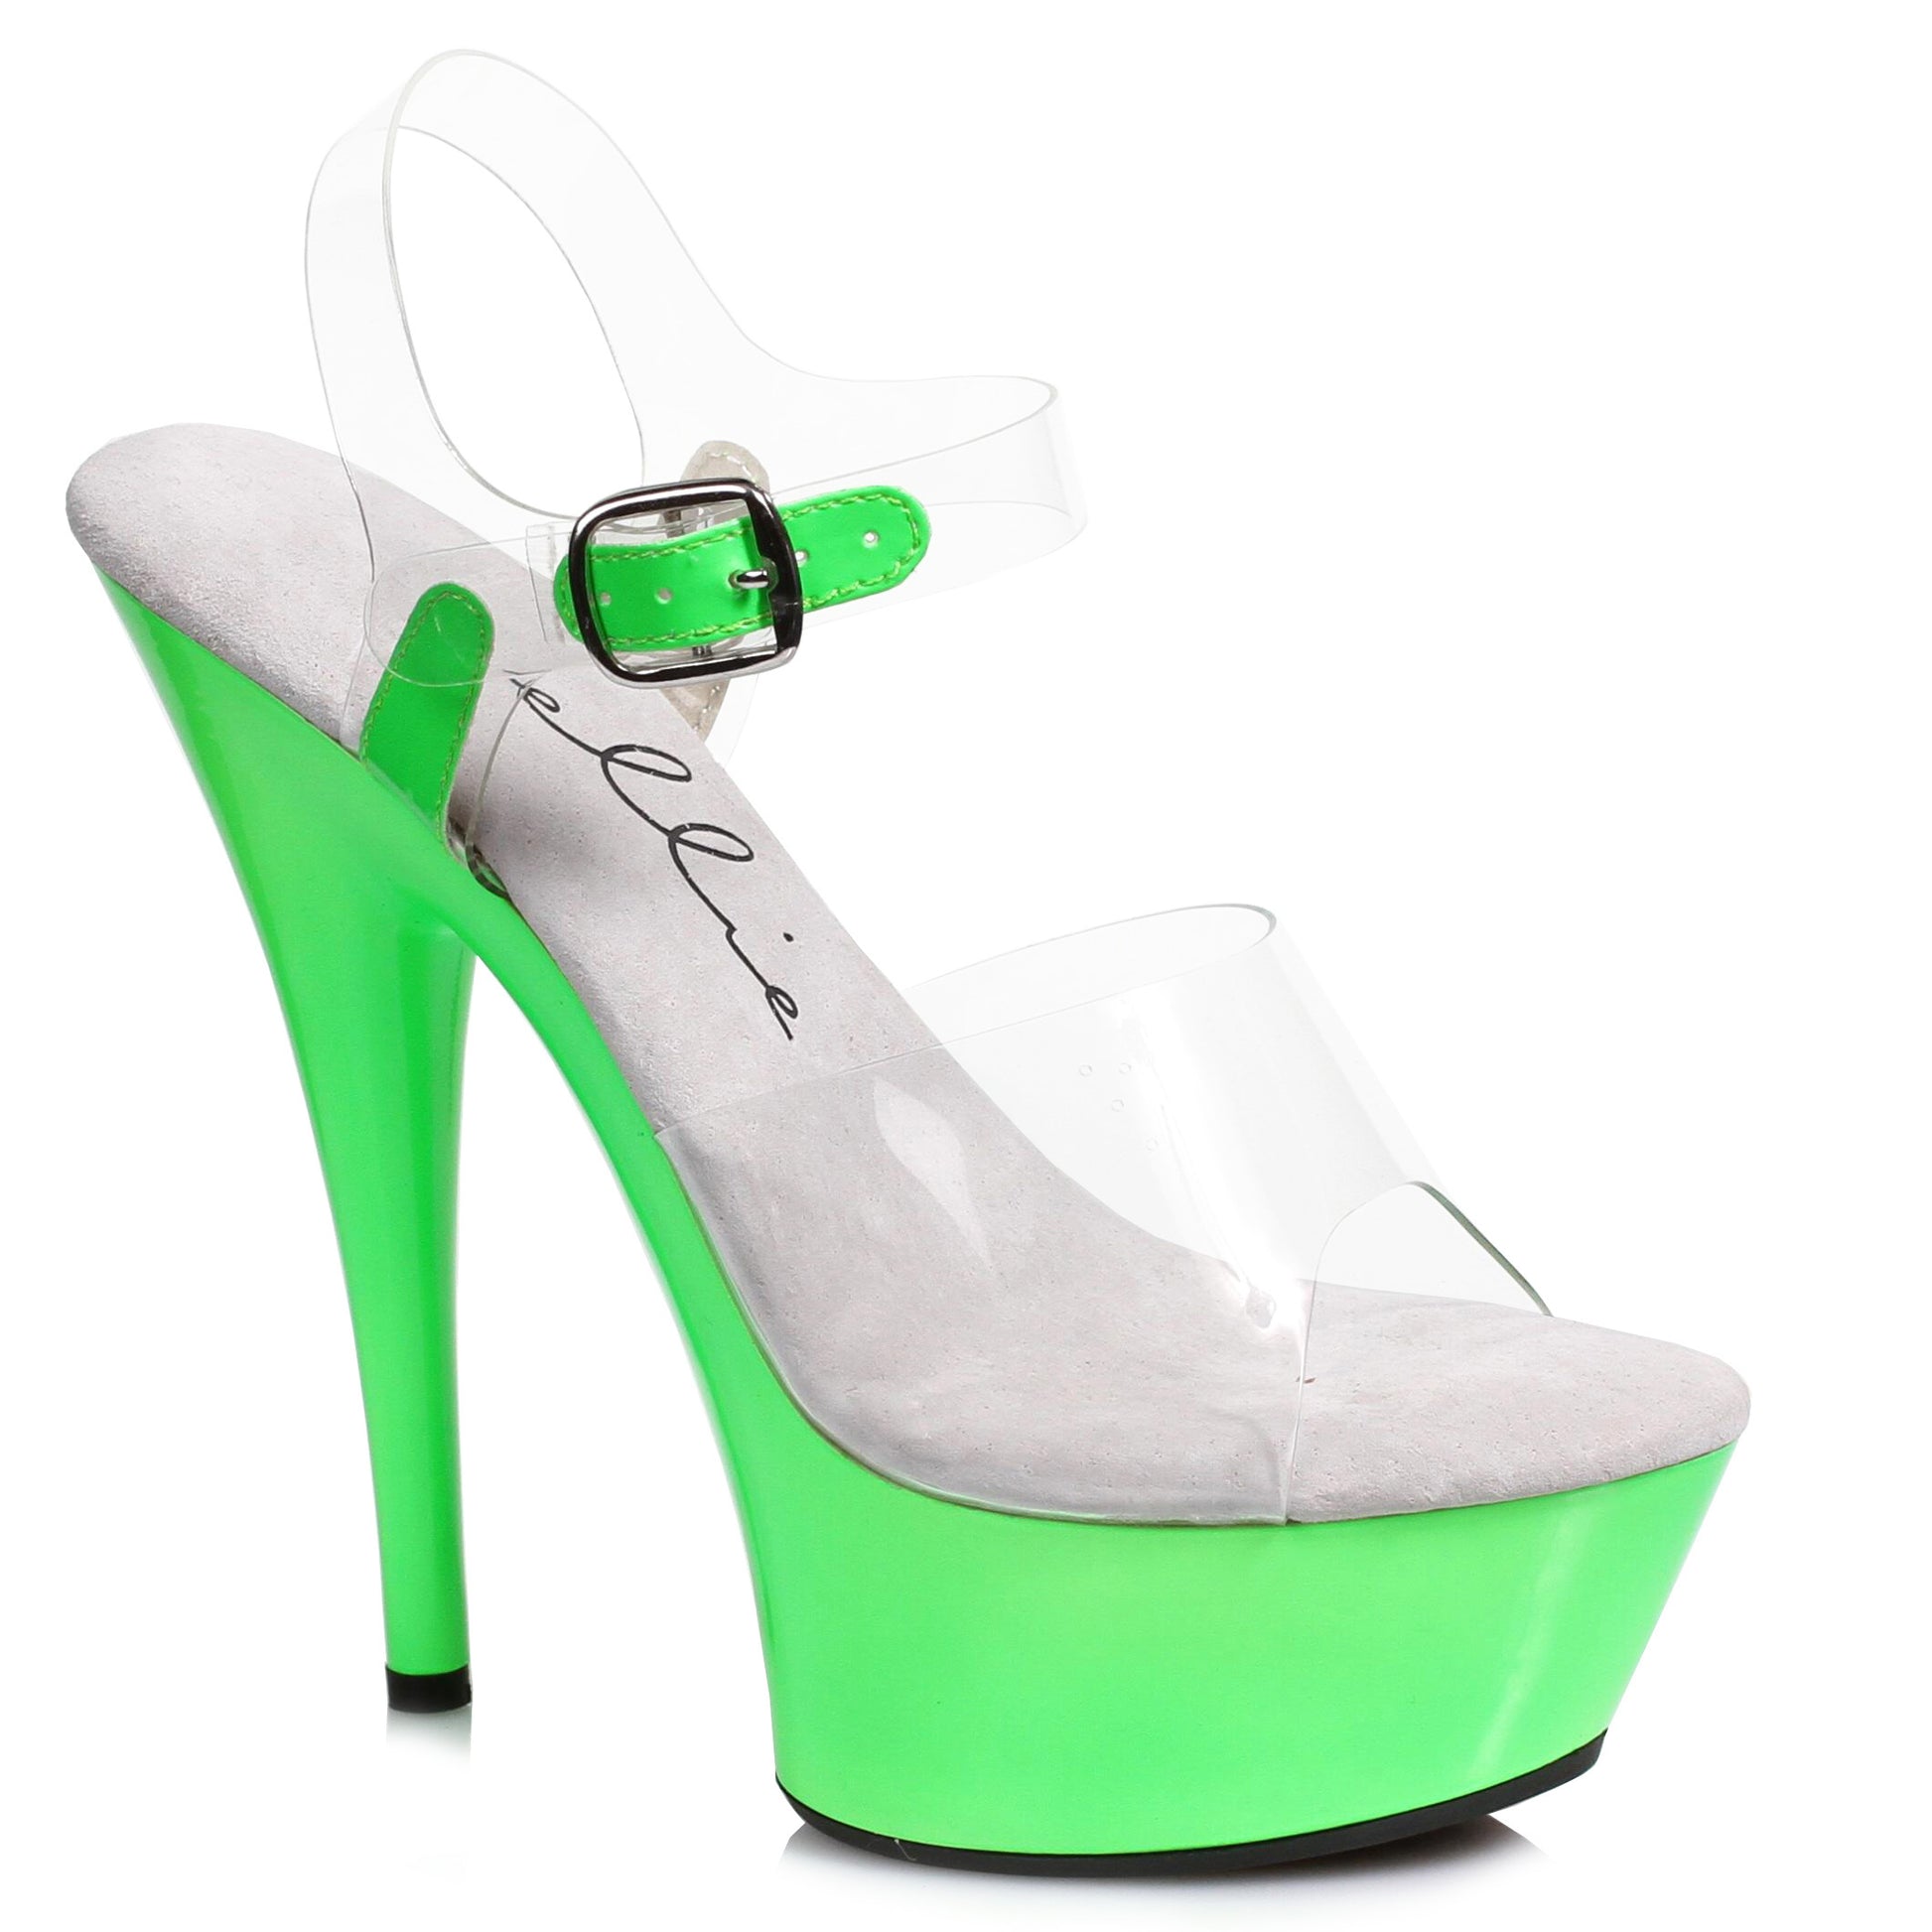 609-ROXY Ellie Shoes 6" Neon Stiletto Sandal. EXTENDED S 6 INCH HEEL SALES 6 IN